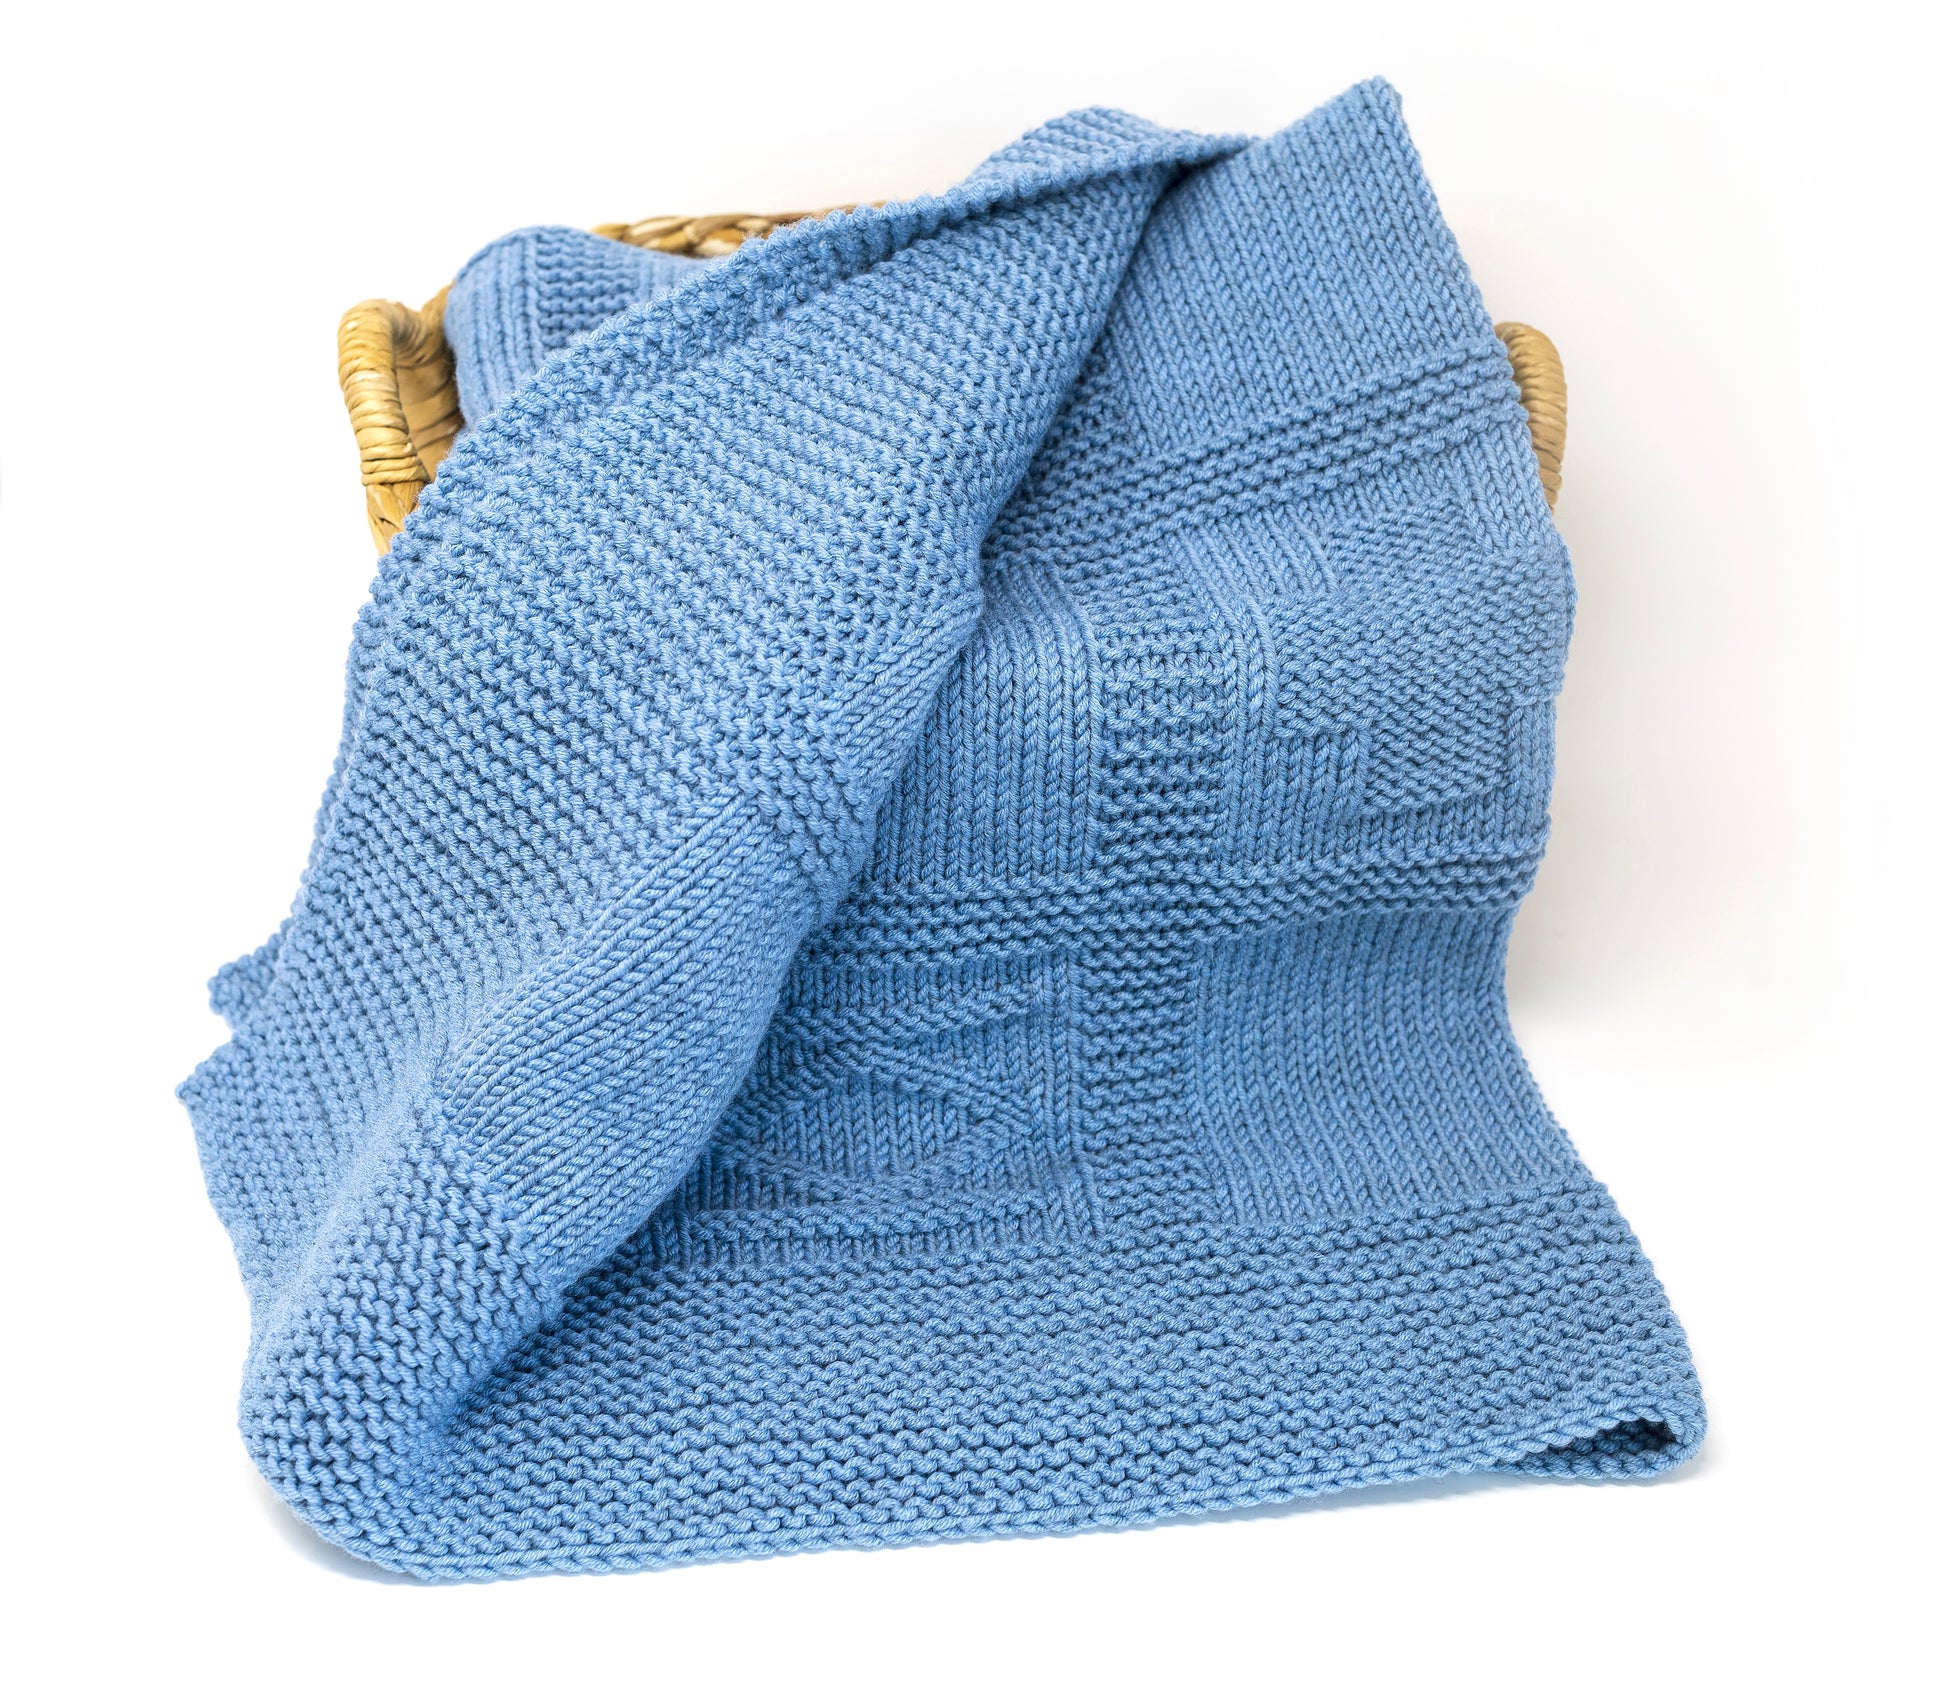 Blue merino wool yarn hand-knitted baby blanket in geometrical knitting pattern